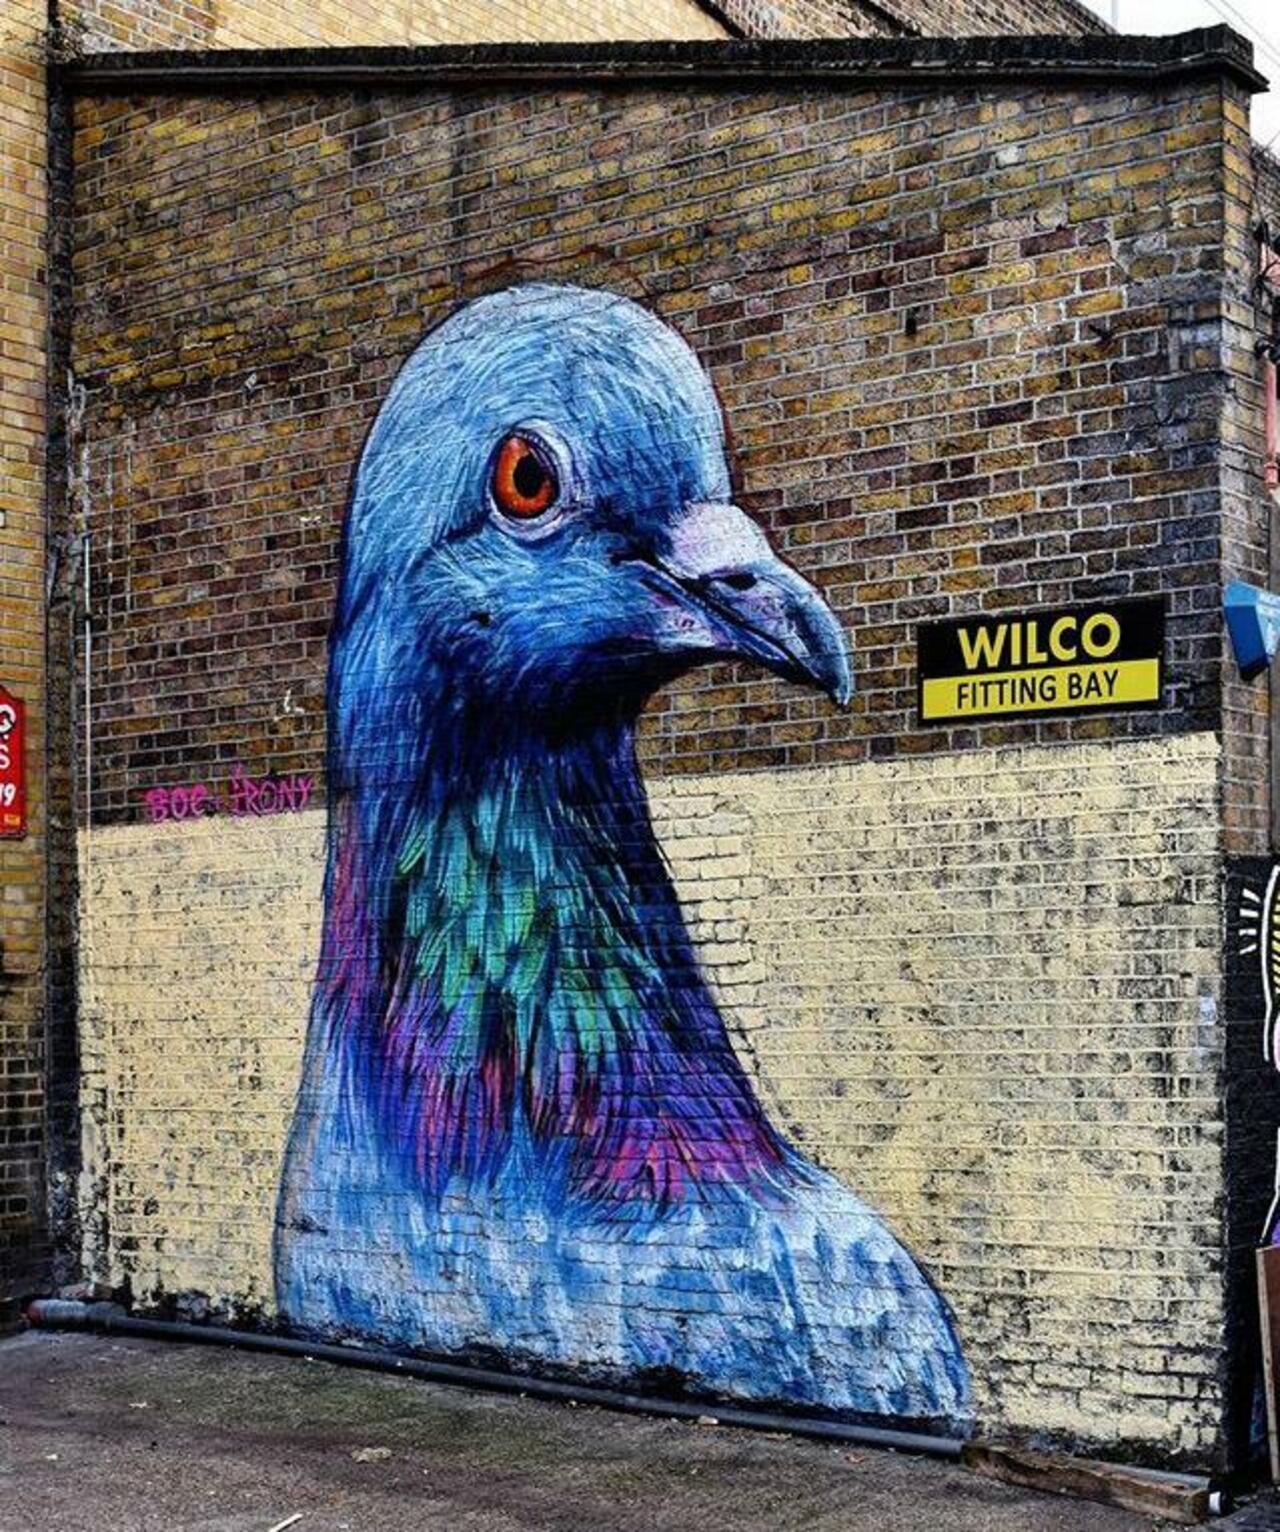 JewelNiles1: JewelNiles1: Street Art by Placee Boe & whoamirony in London 

#art #graffiti #mural #streetart http://t.co/HrCe9a5MpP